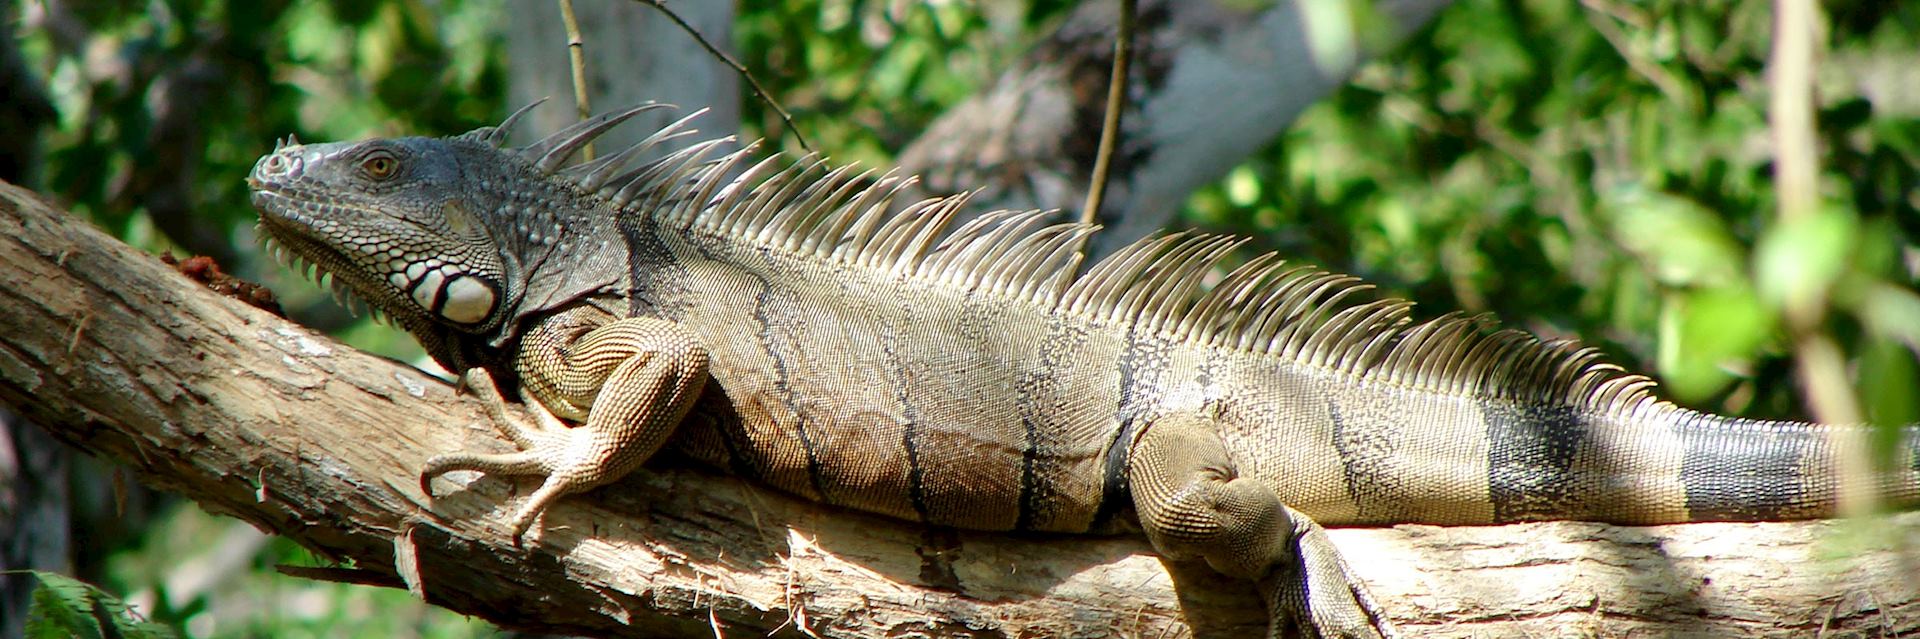 Iguana, Belize